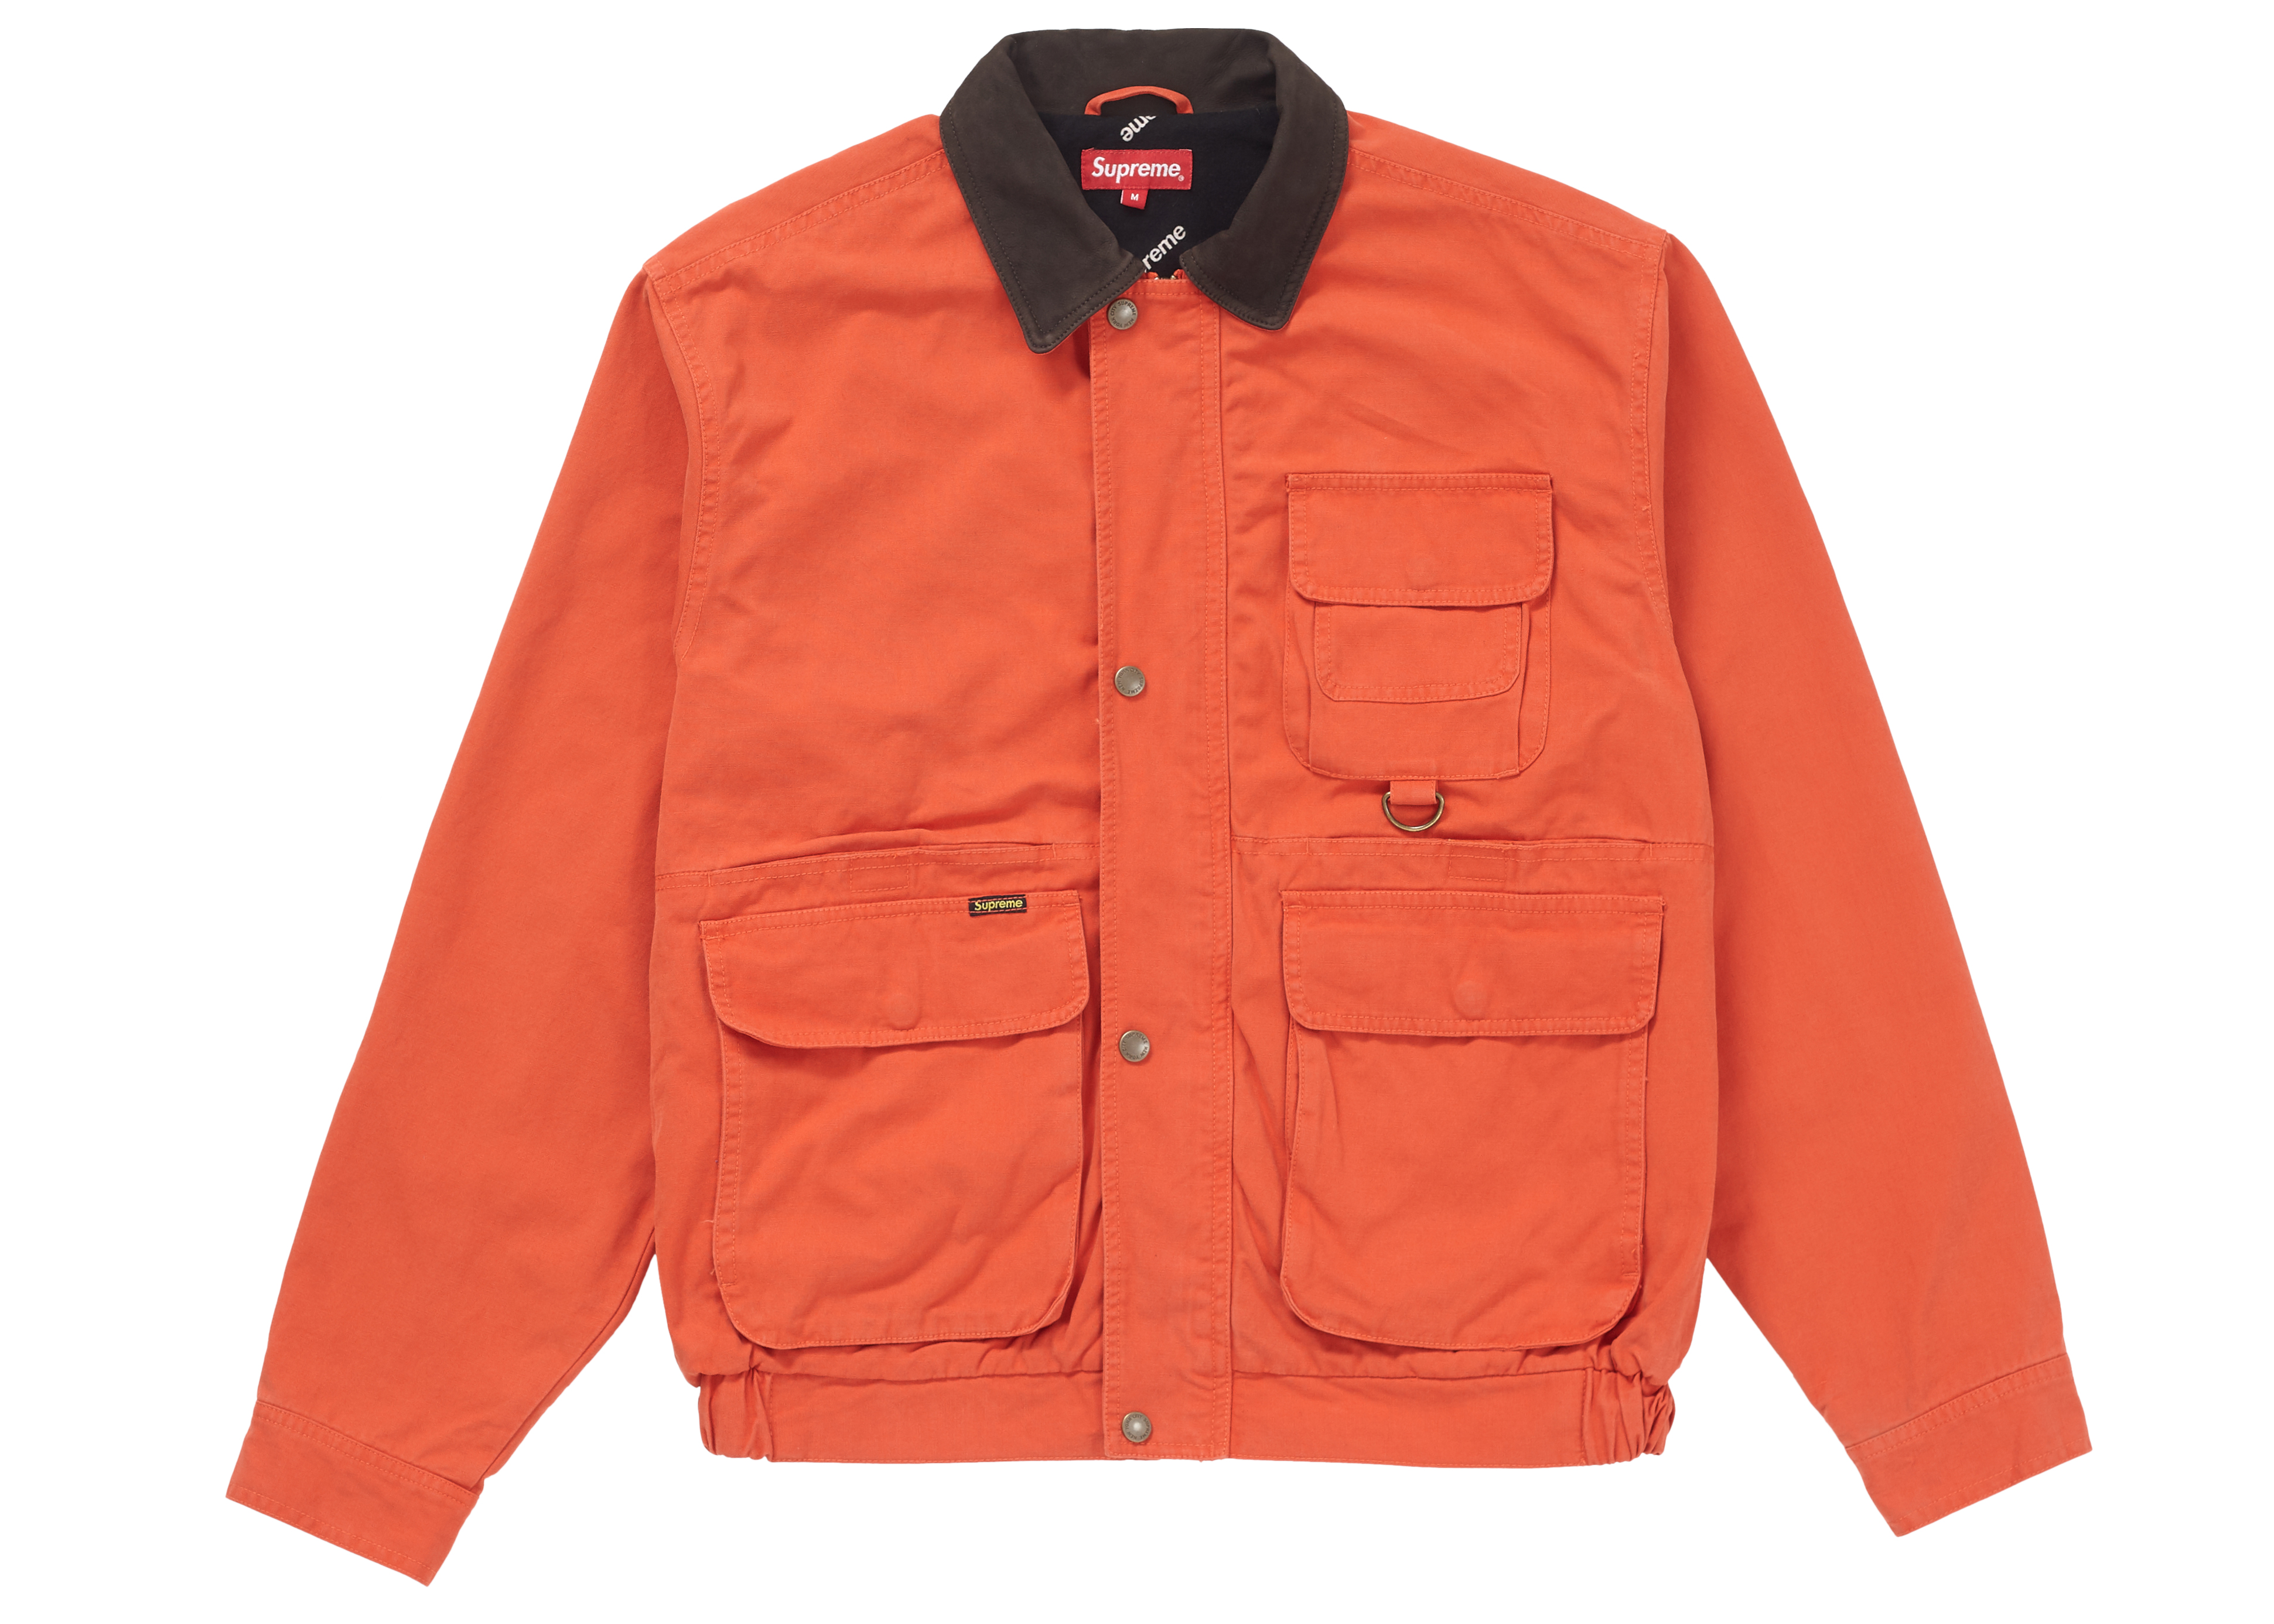 SupremeSupreme field jacket 18aw オレンジ